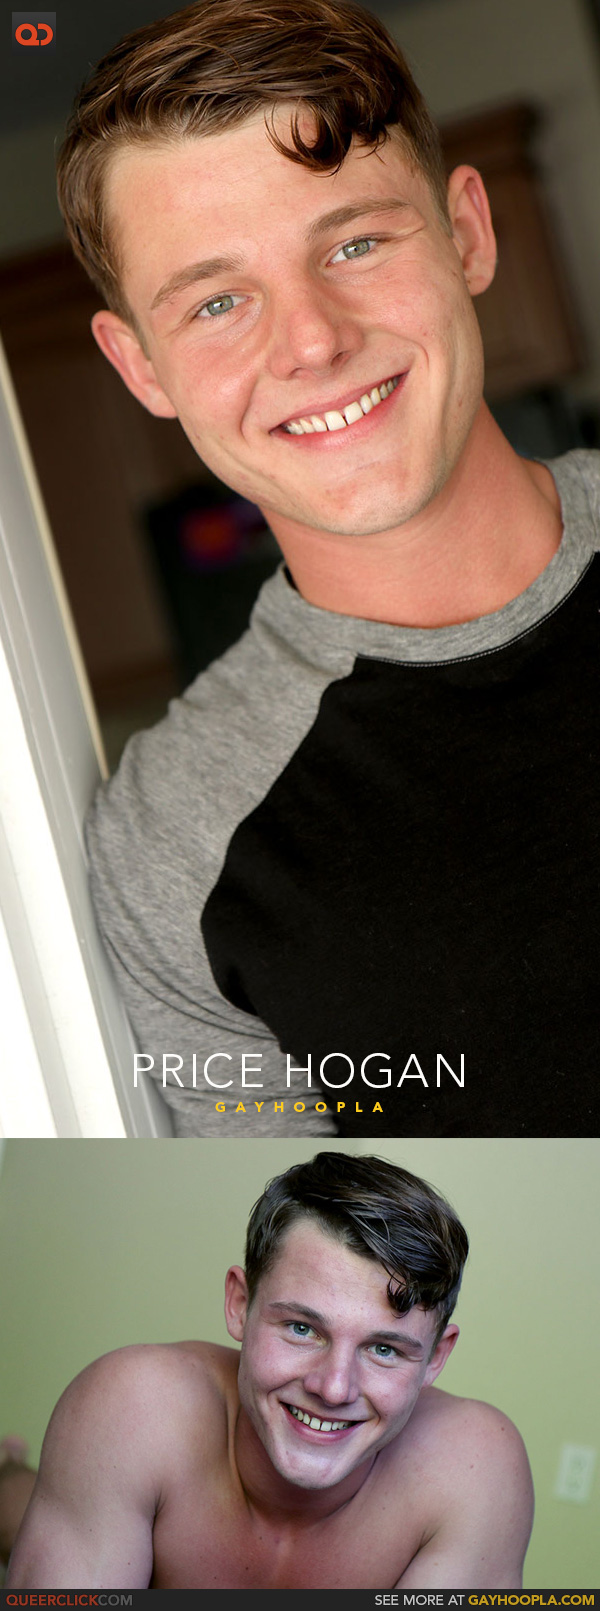 Gayhoopla: Price Hogan